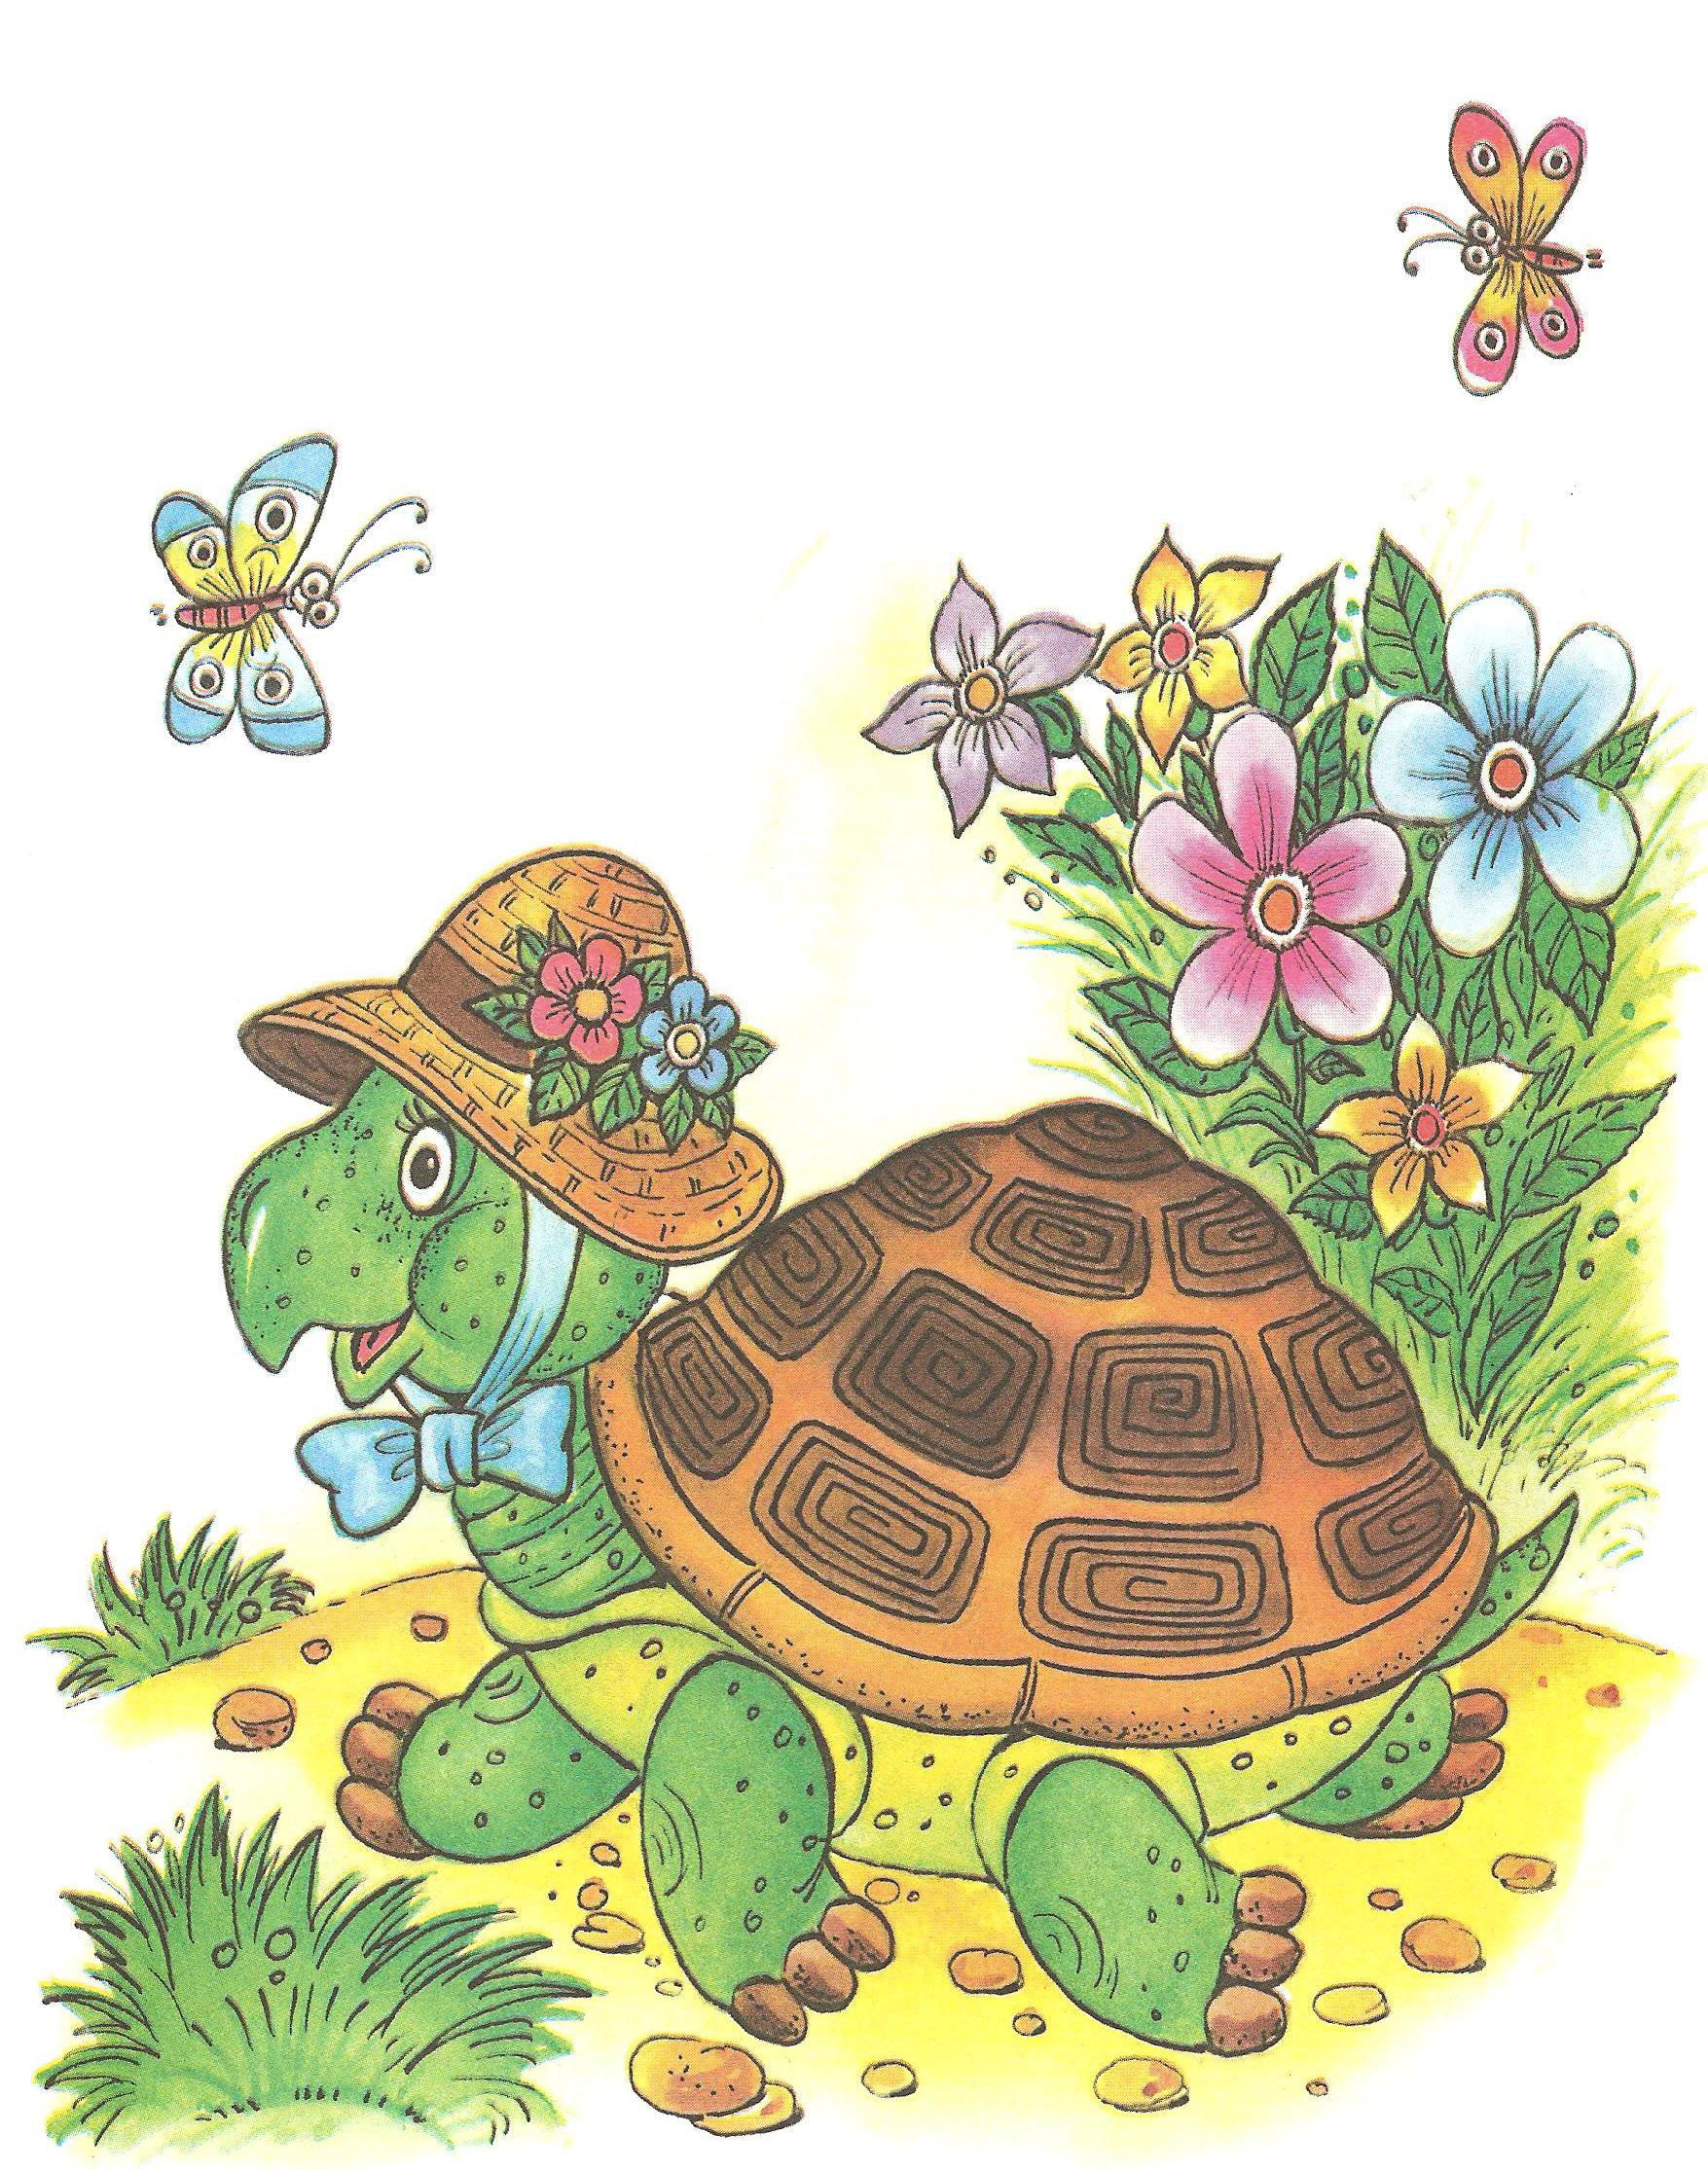 Стихи про черепах. Чуковский черепаха. Загадка про черепаху для детей. Стих про черепашку для детей. Стих про черепаху для детей.